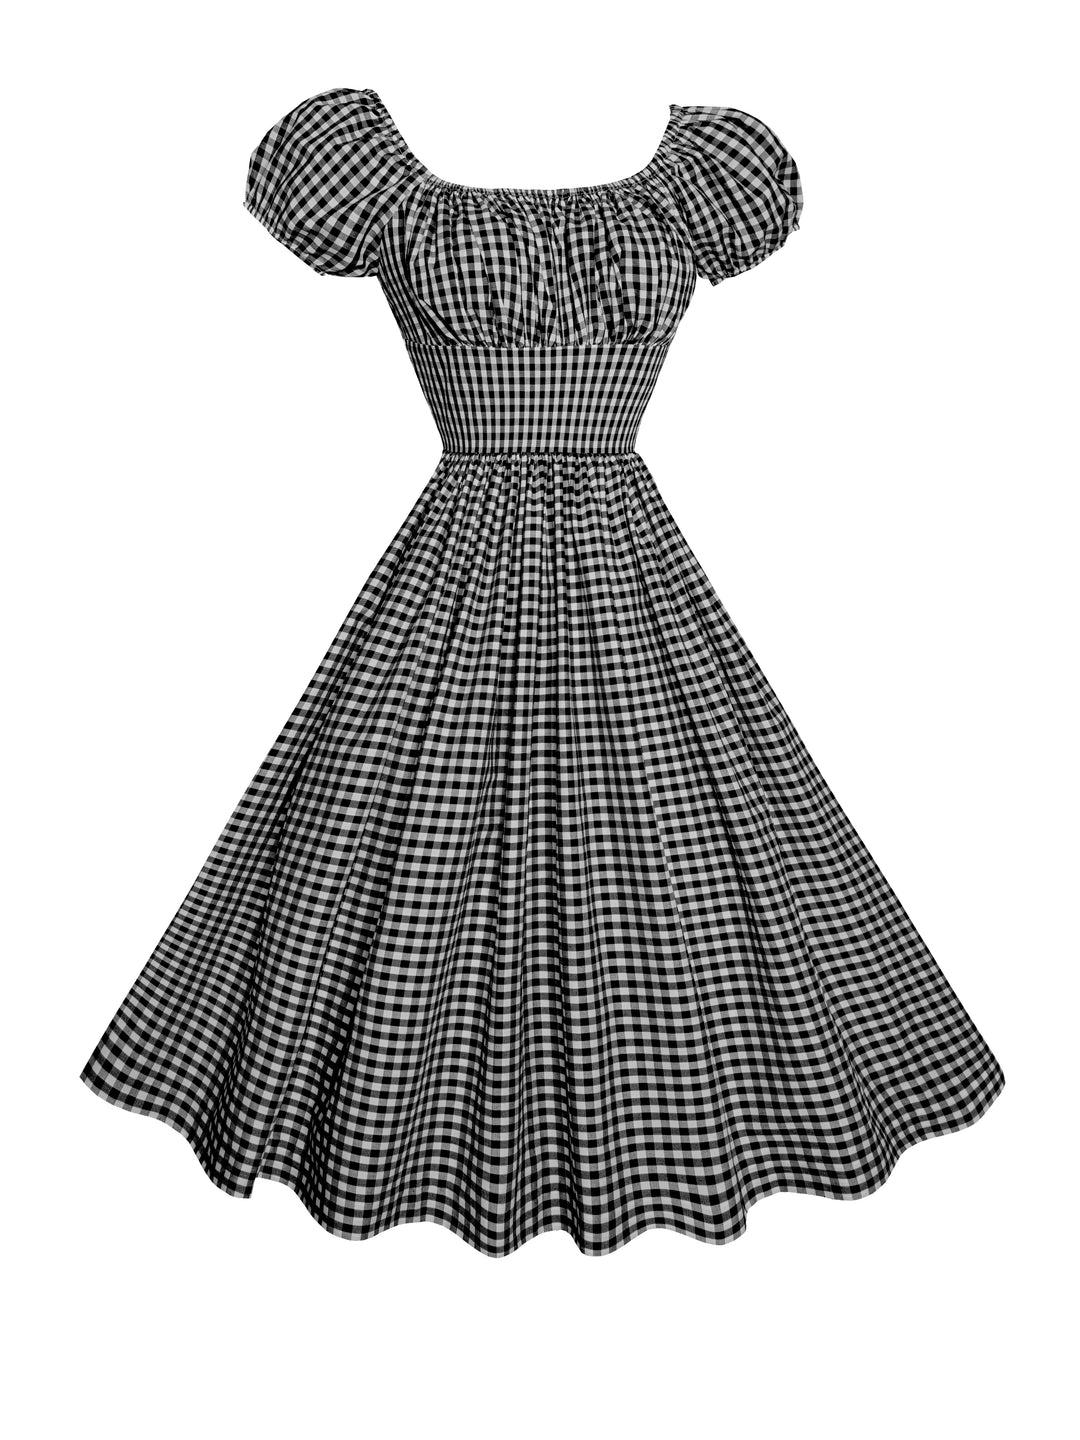 MTO - Loretta Dress in Black Gingham - Medium Checks